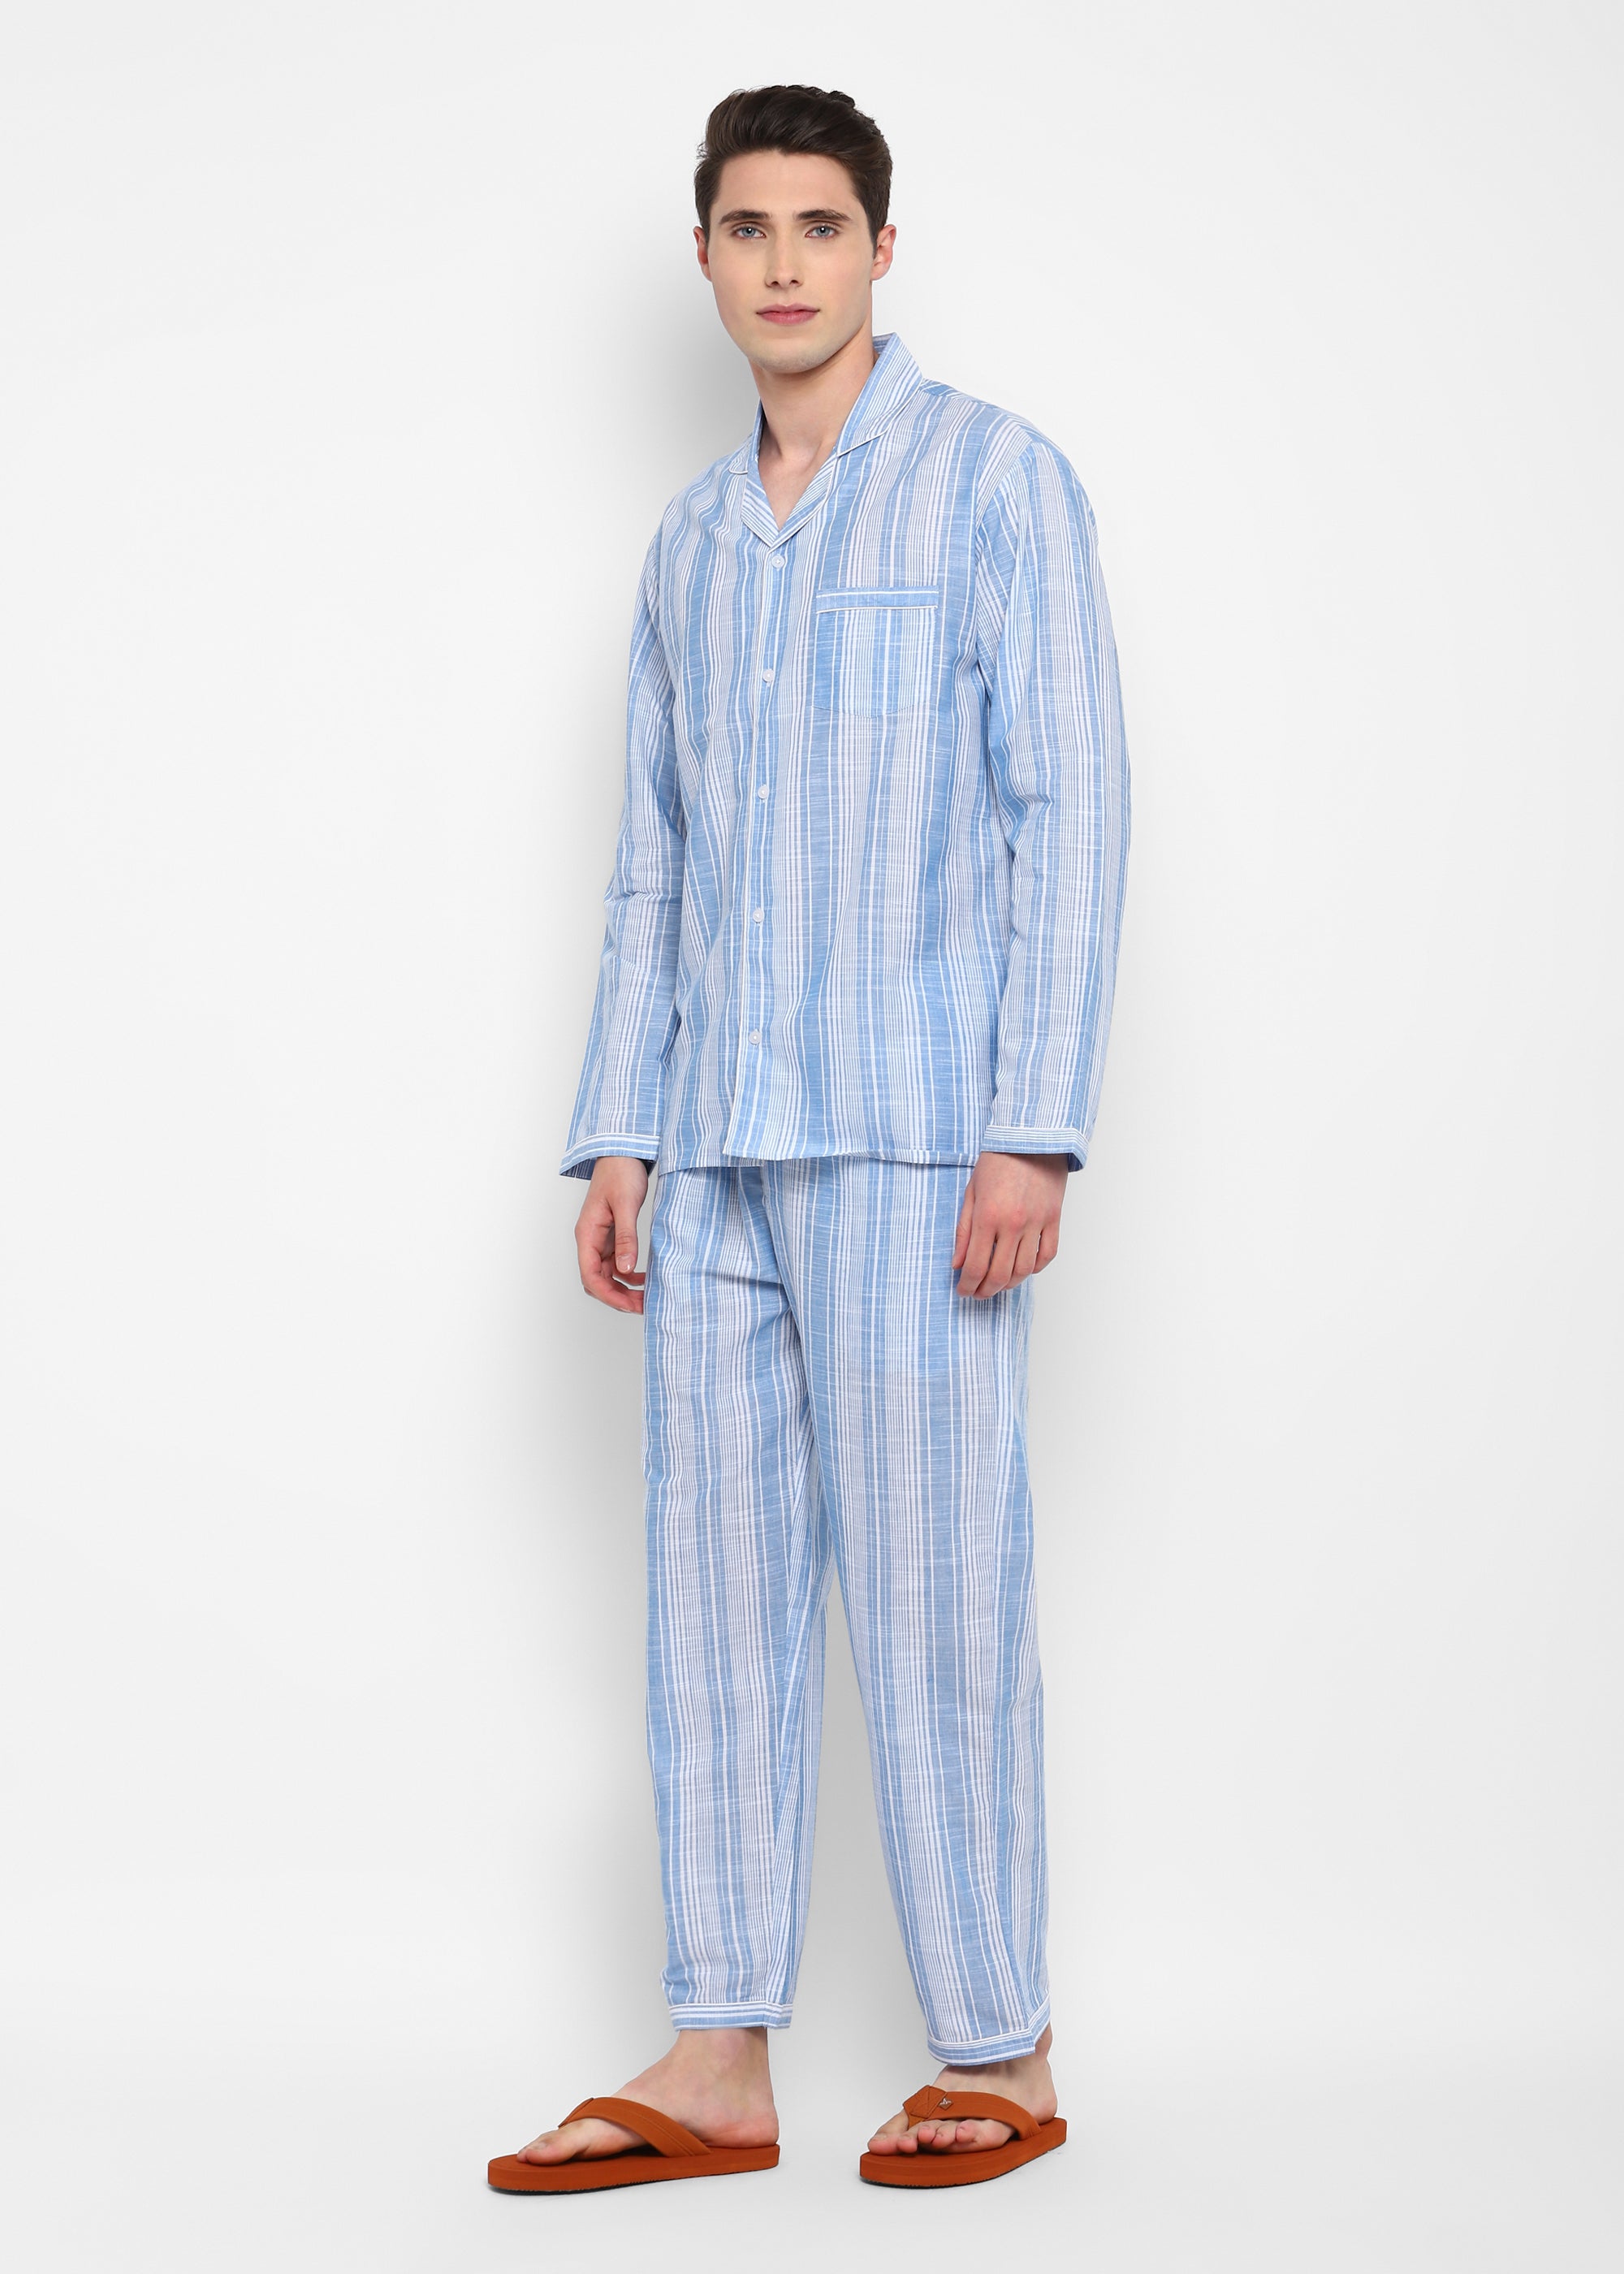 Multi Stripes Print Cotton Men's Night Suit